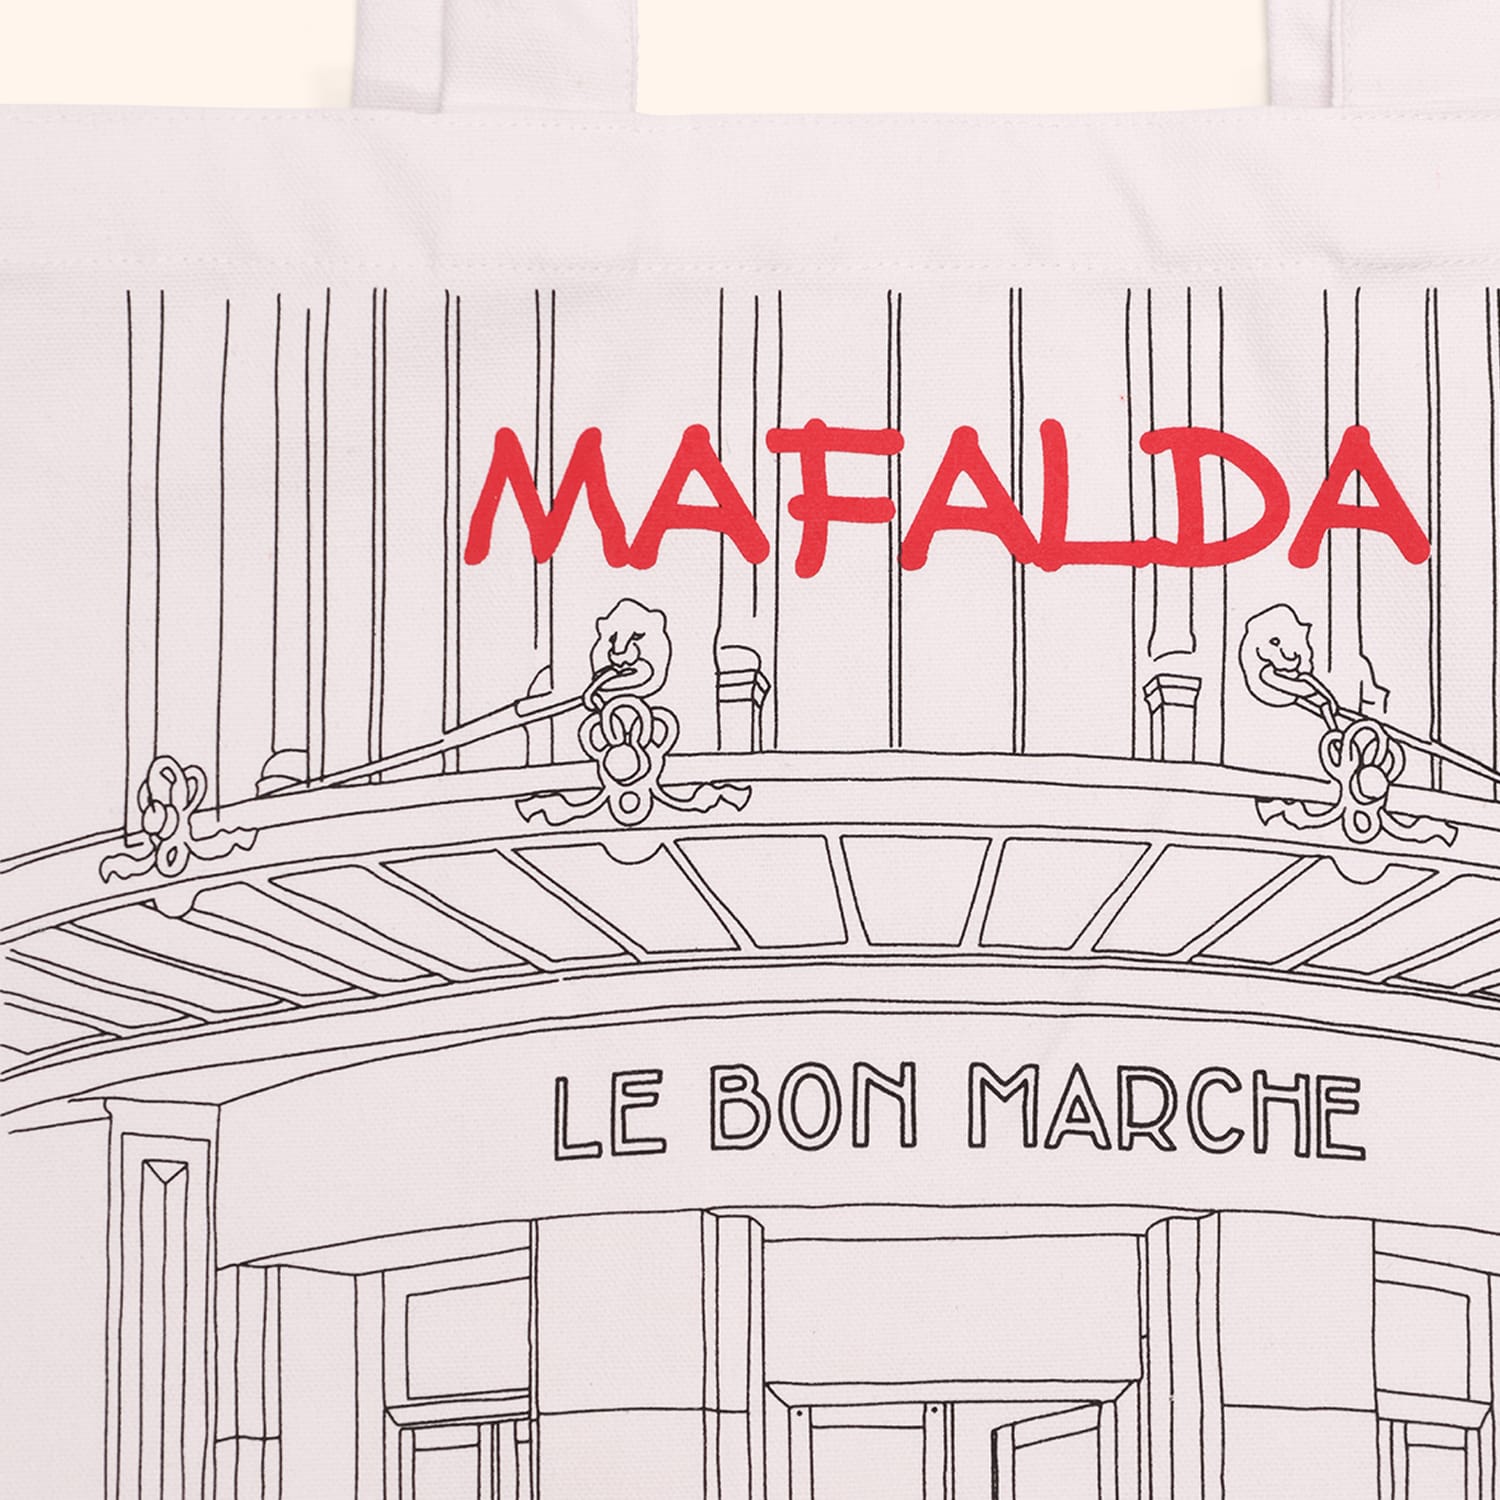 Totebag Mafalda